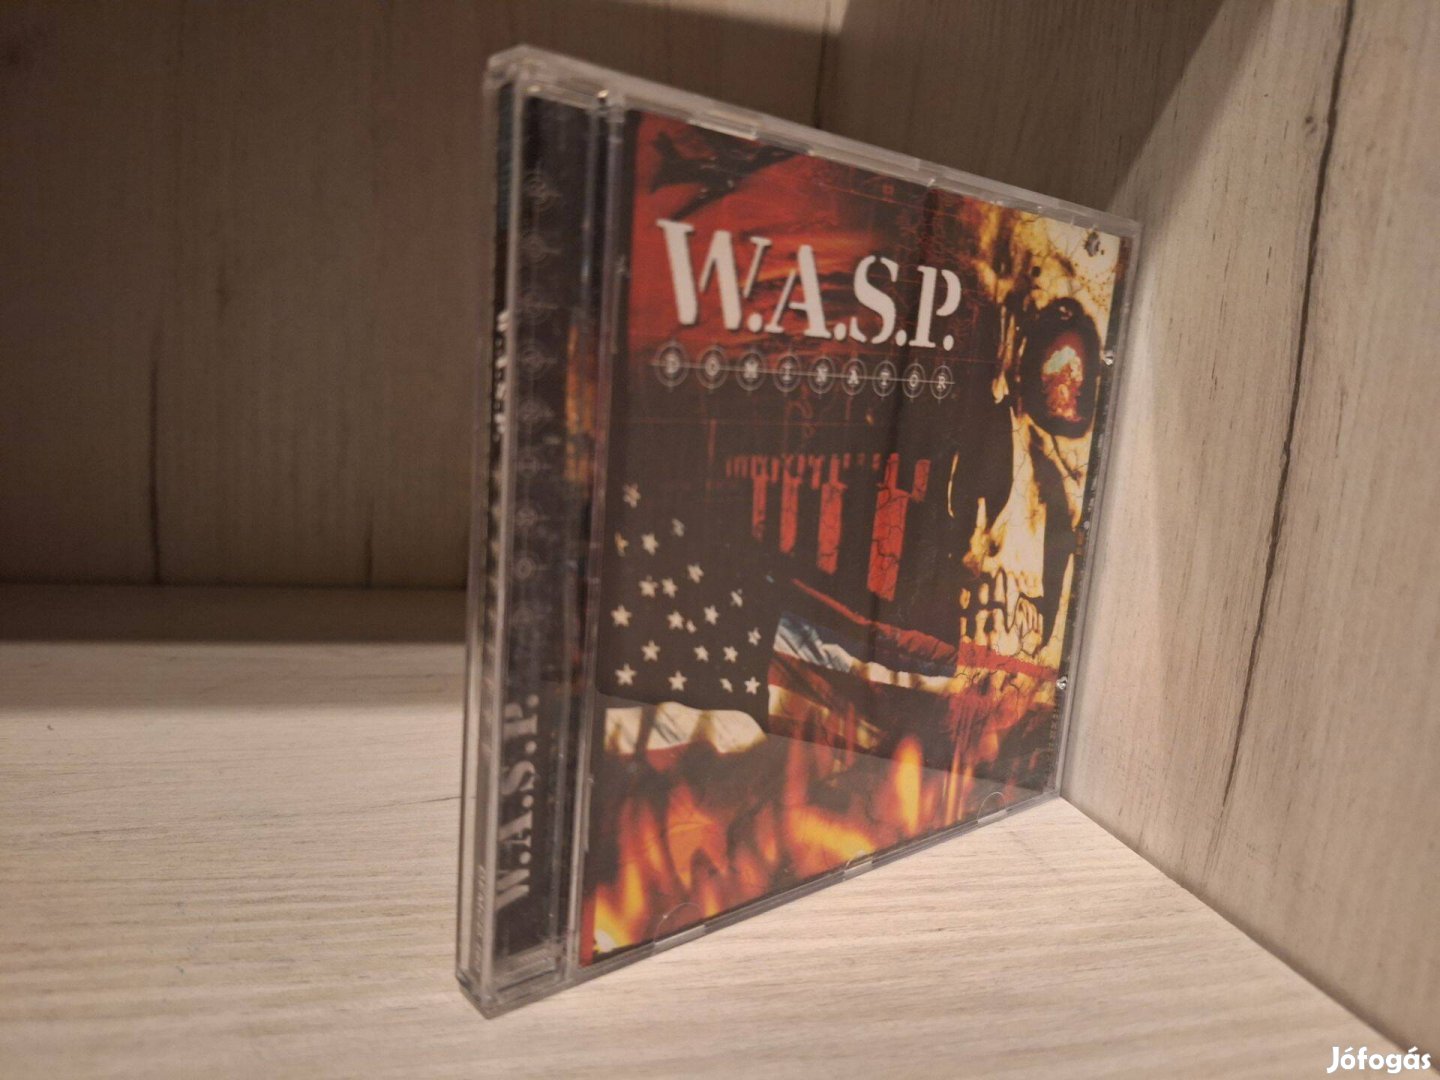 W.A.S.P. - Dominator CD